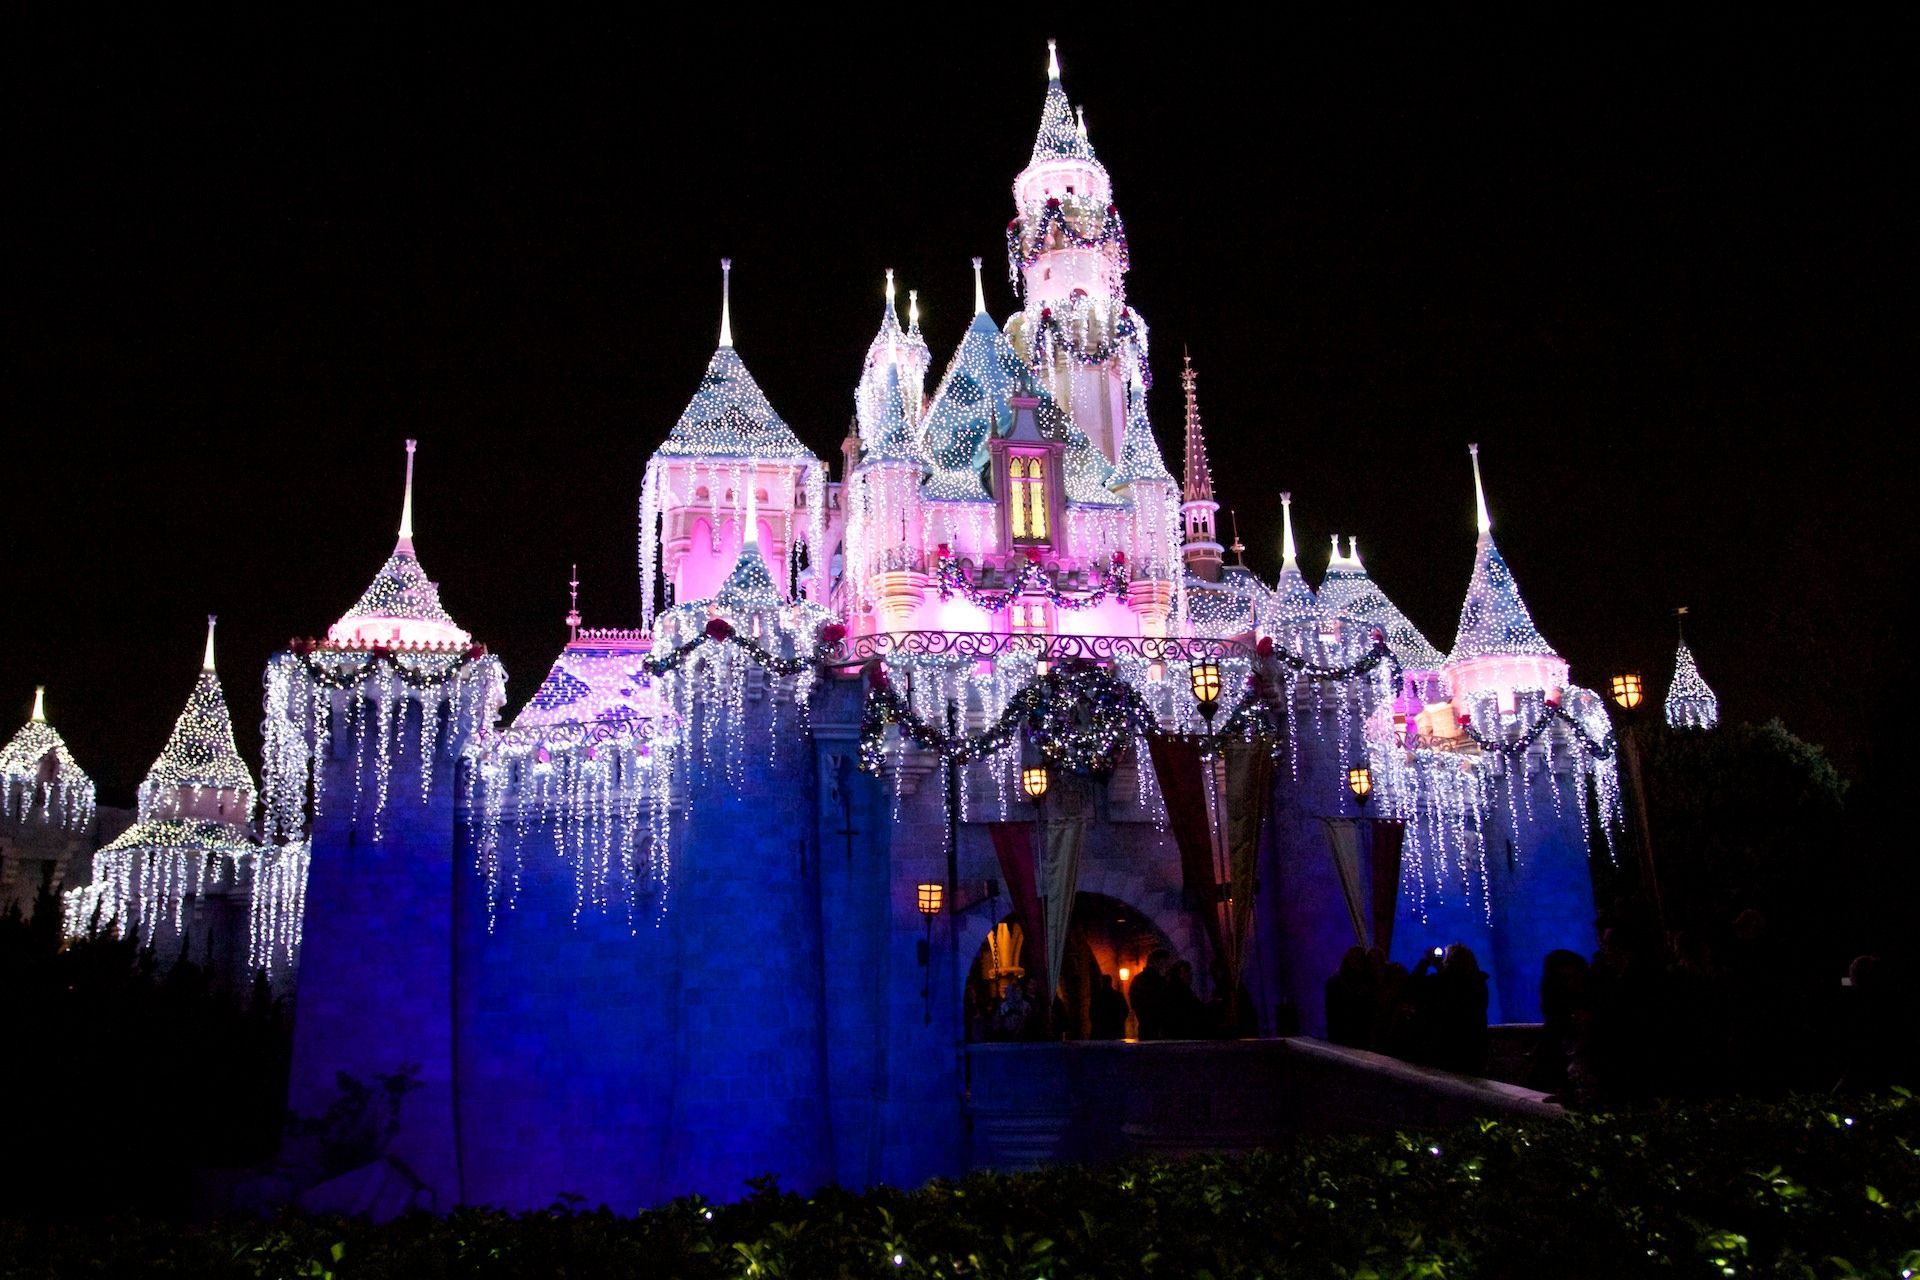 Sleeping Beauty Castle Disneyland During Christmas at Night ...